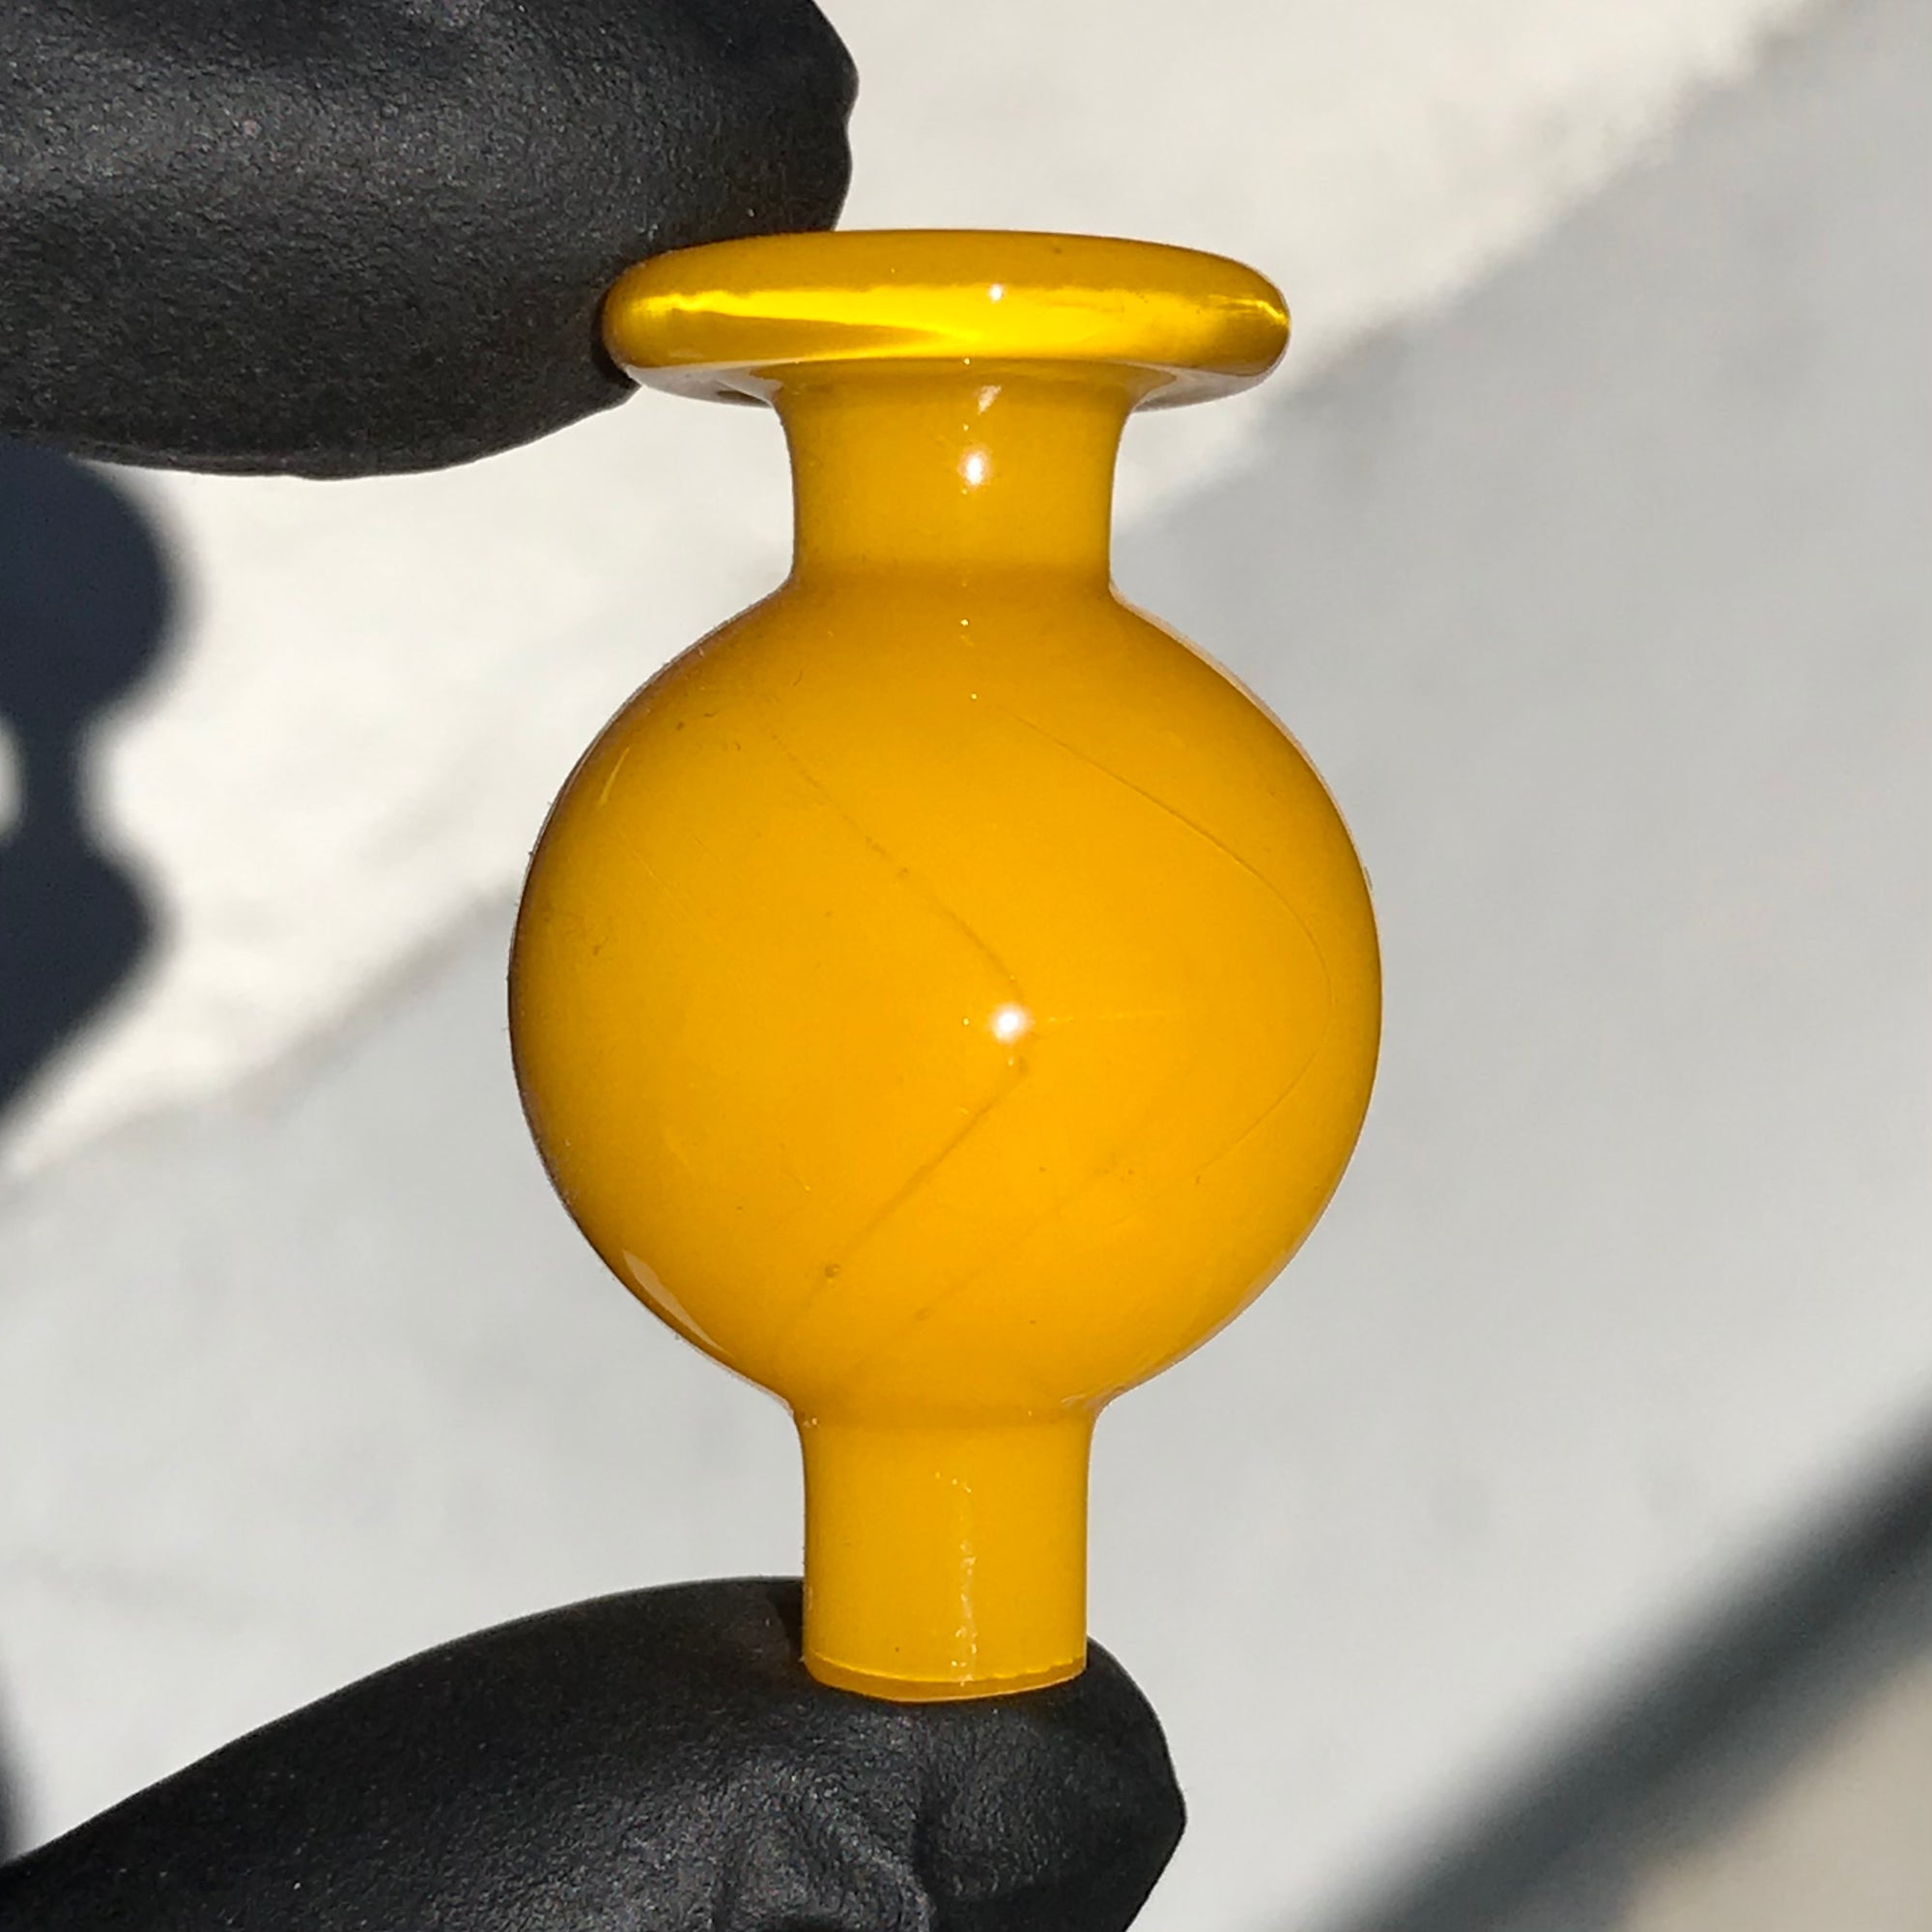 Bradley Miller 25mm Banger Bubble Cap (Yellow Crayon) show variant 